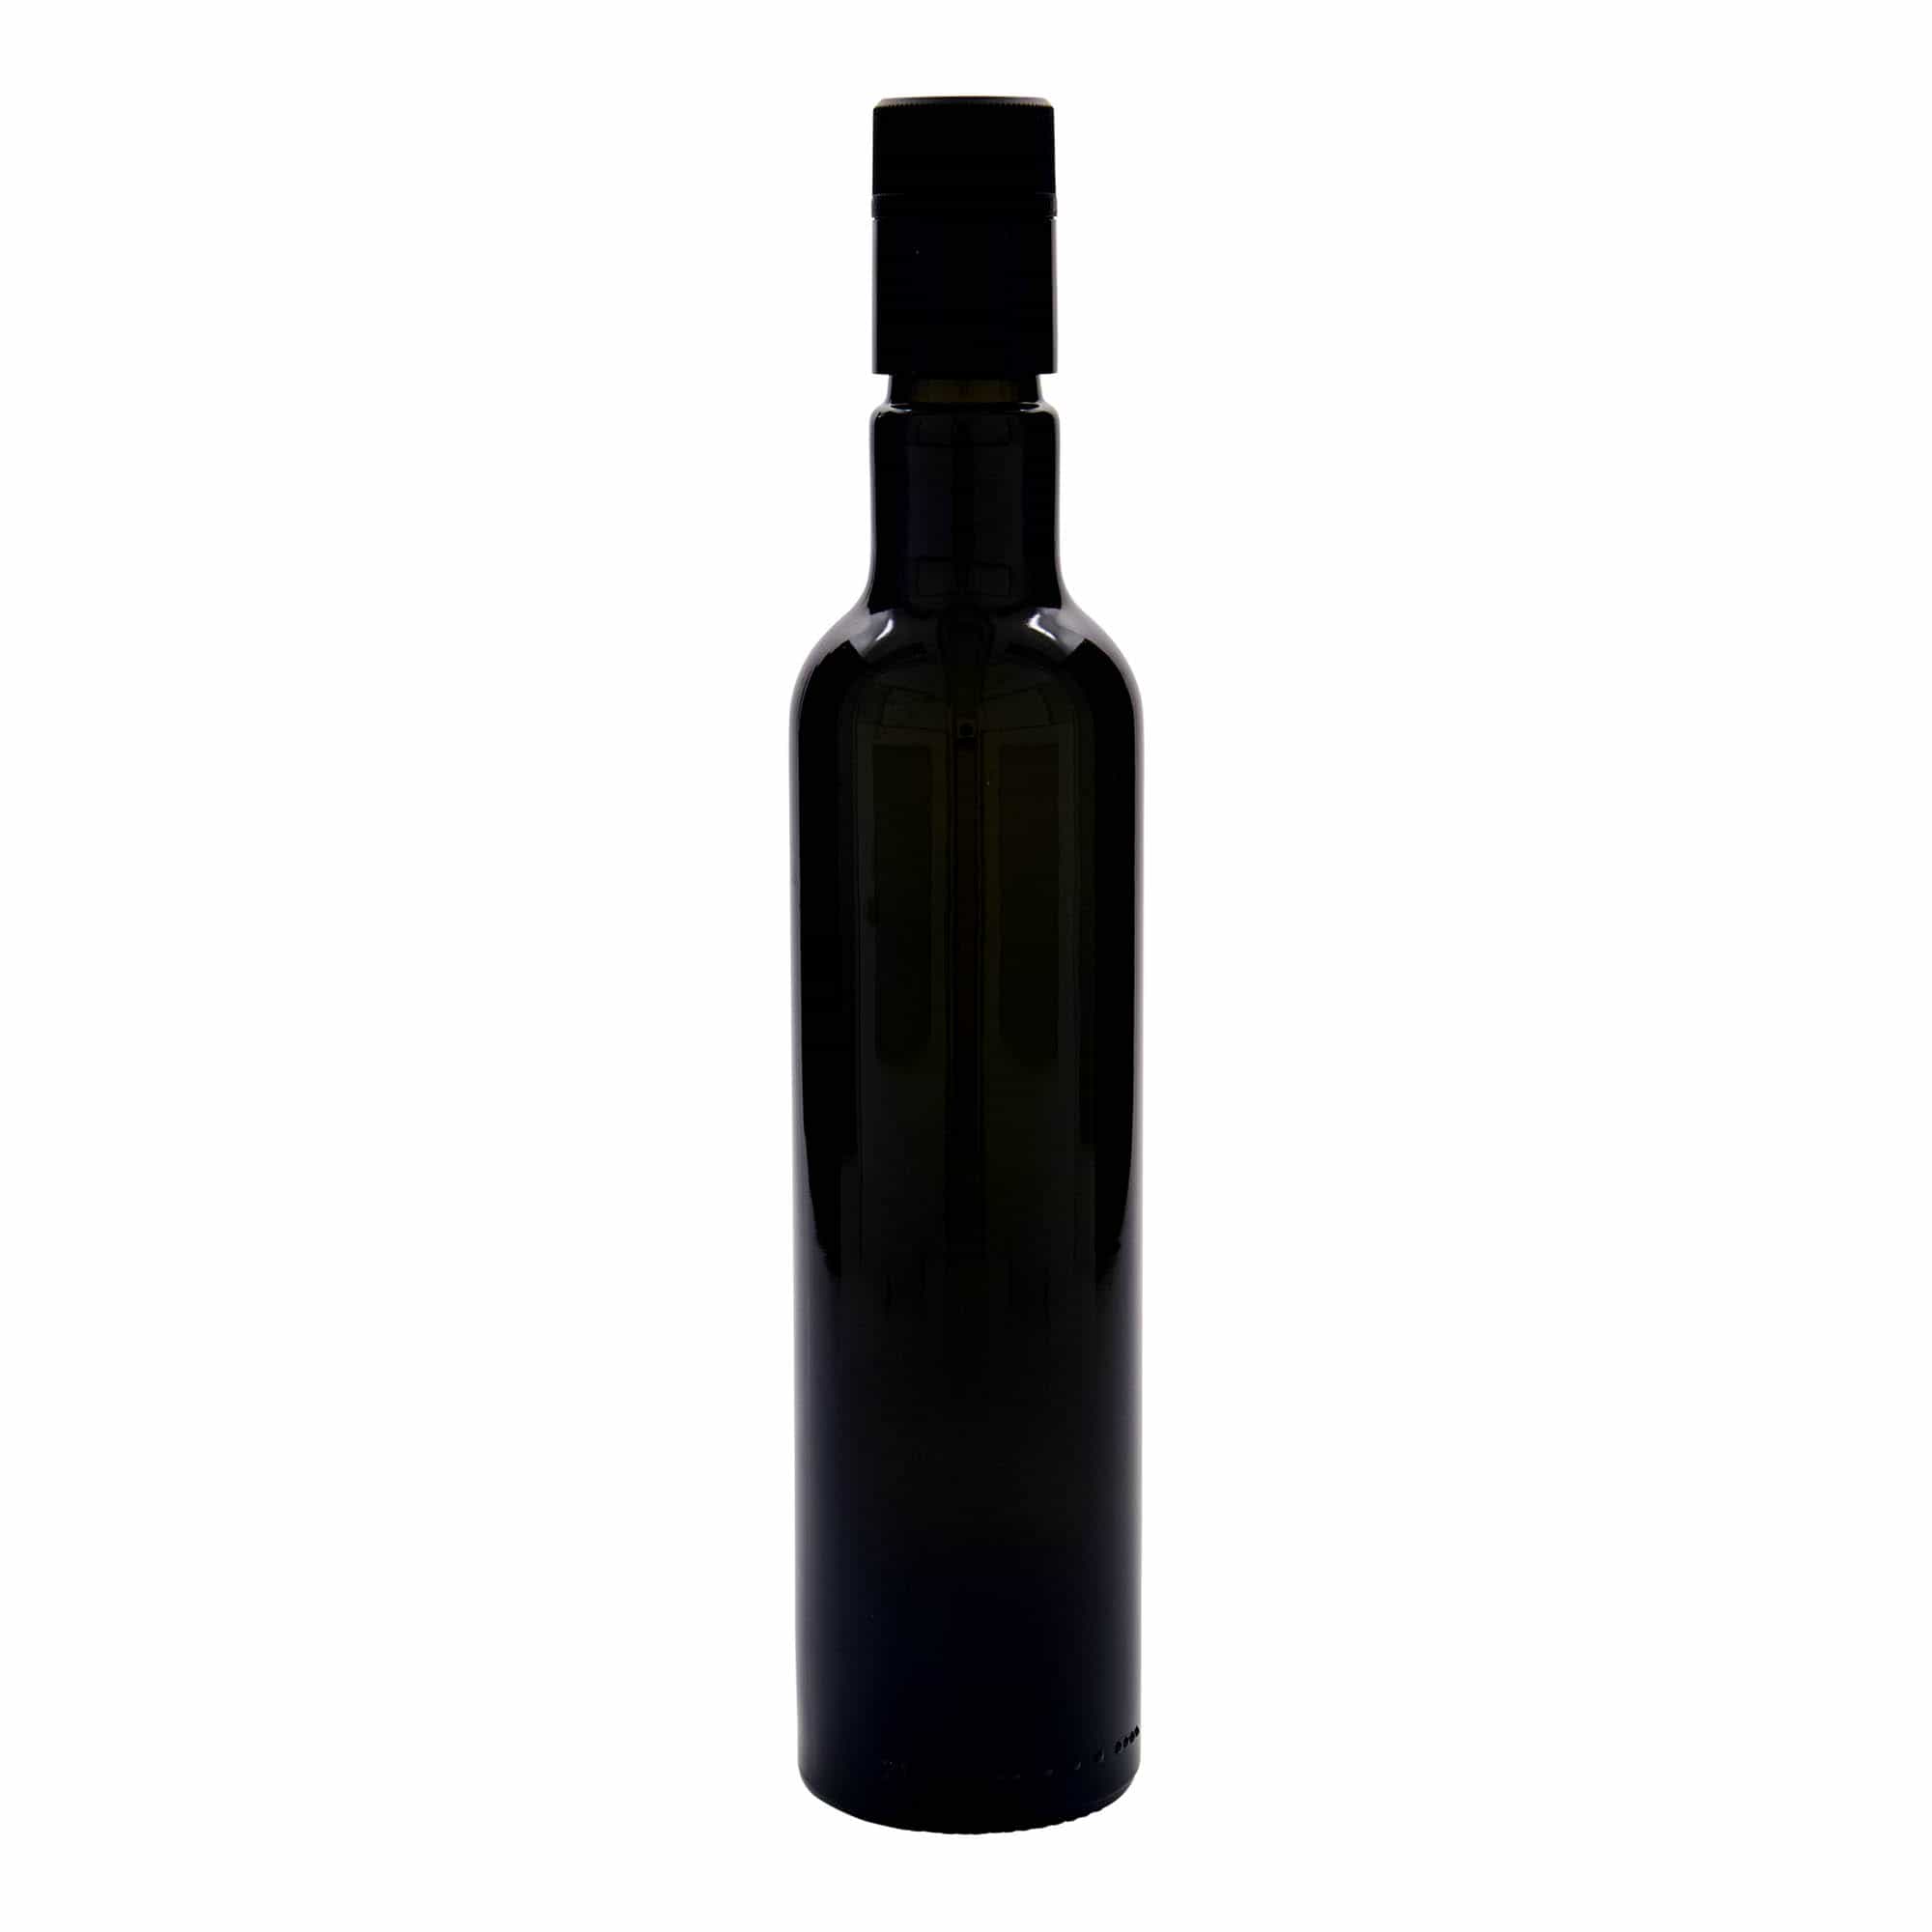 500 ml vinäger-/oljeflaska 'Willy New', glas, antikgrön, mynning: DOP